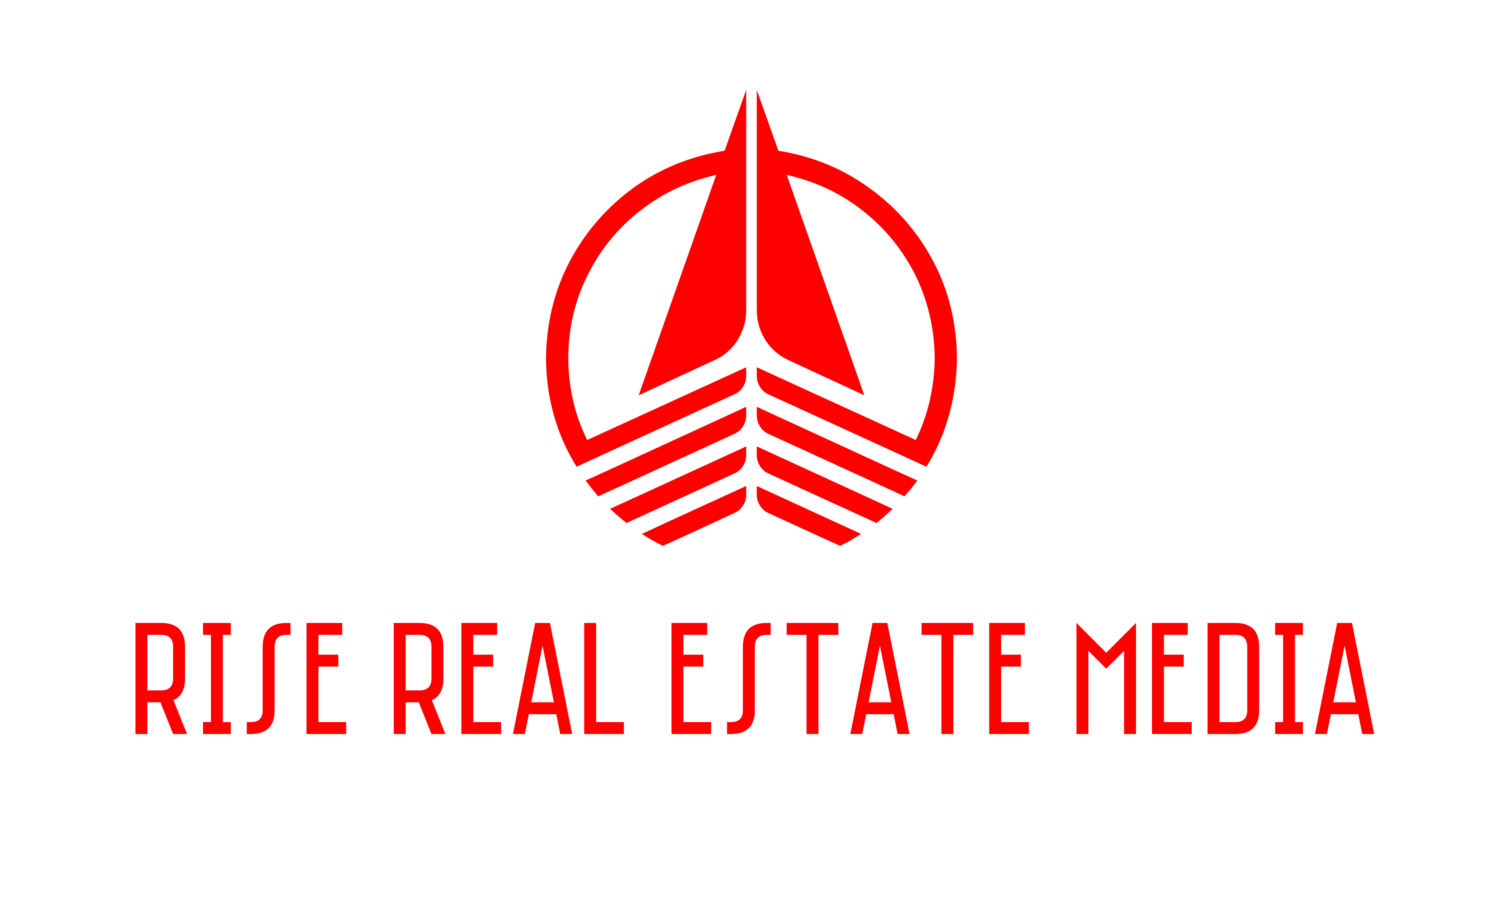 Rise Real Estate Media - Toronto Based Real Estate Photographer/Videographer